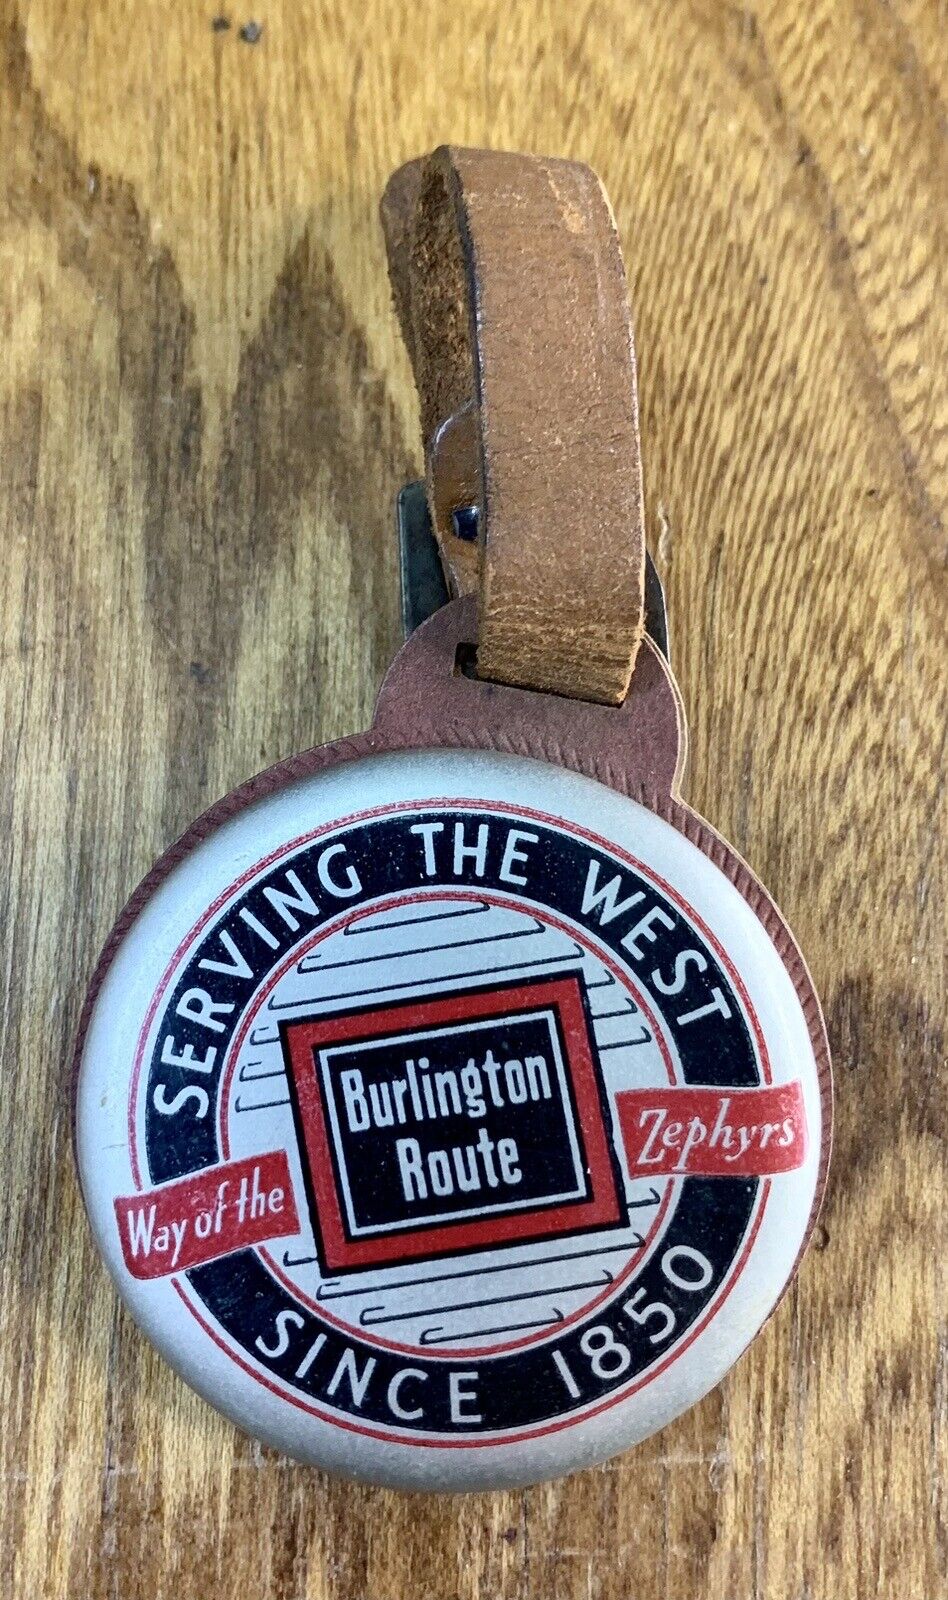 Burlington Route - Way of the Zephyr Badge - Since 1850